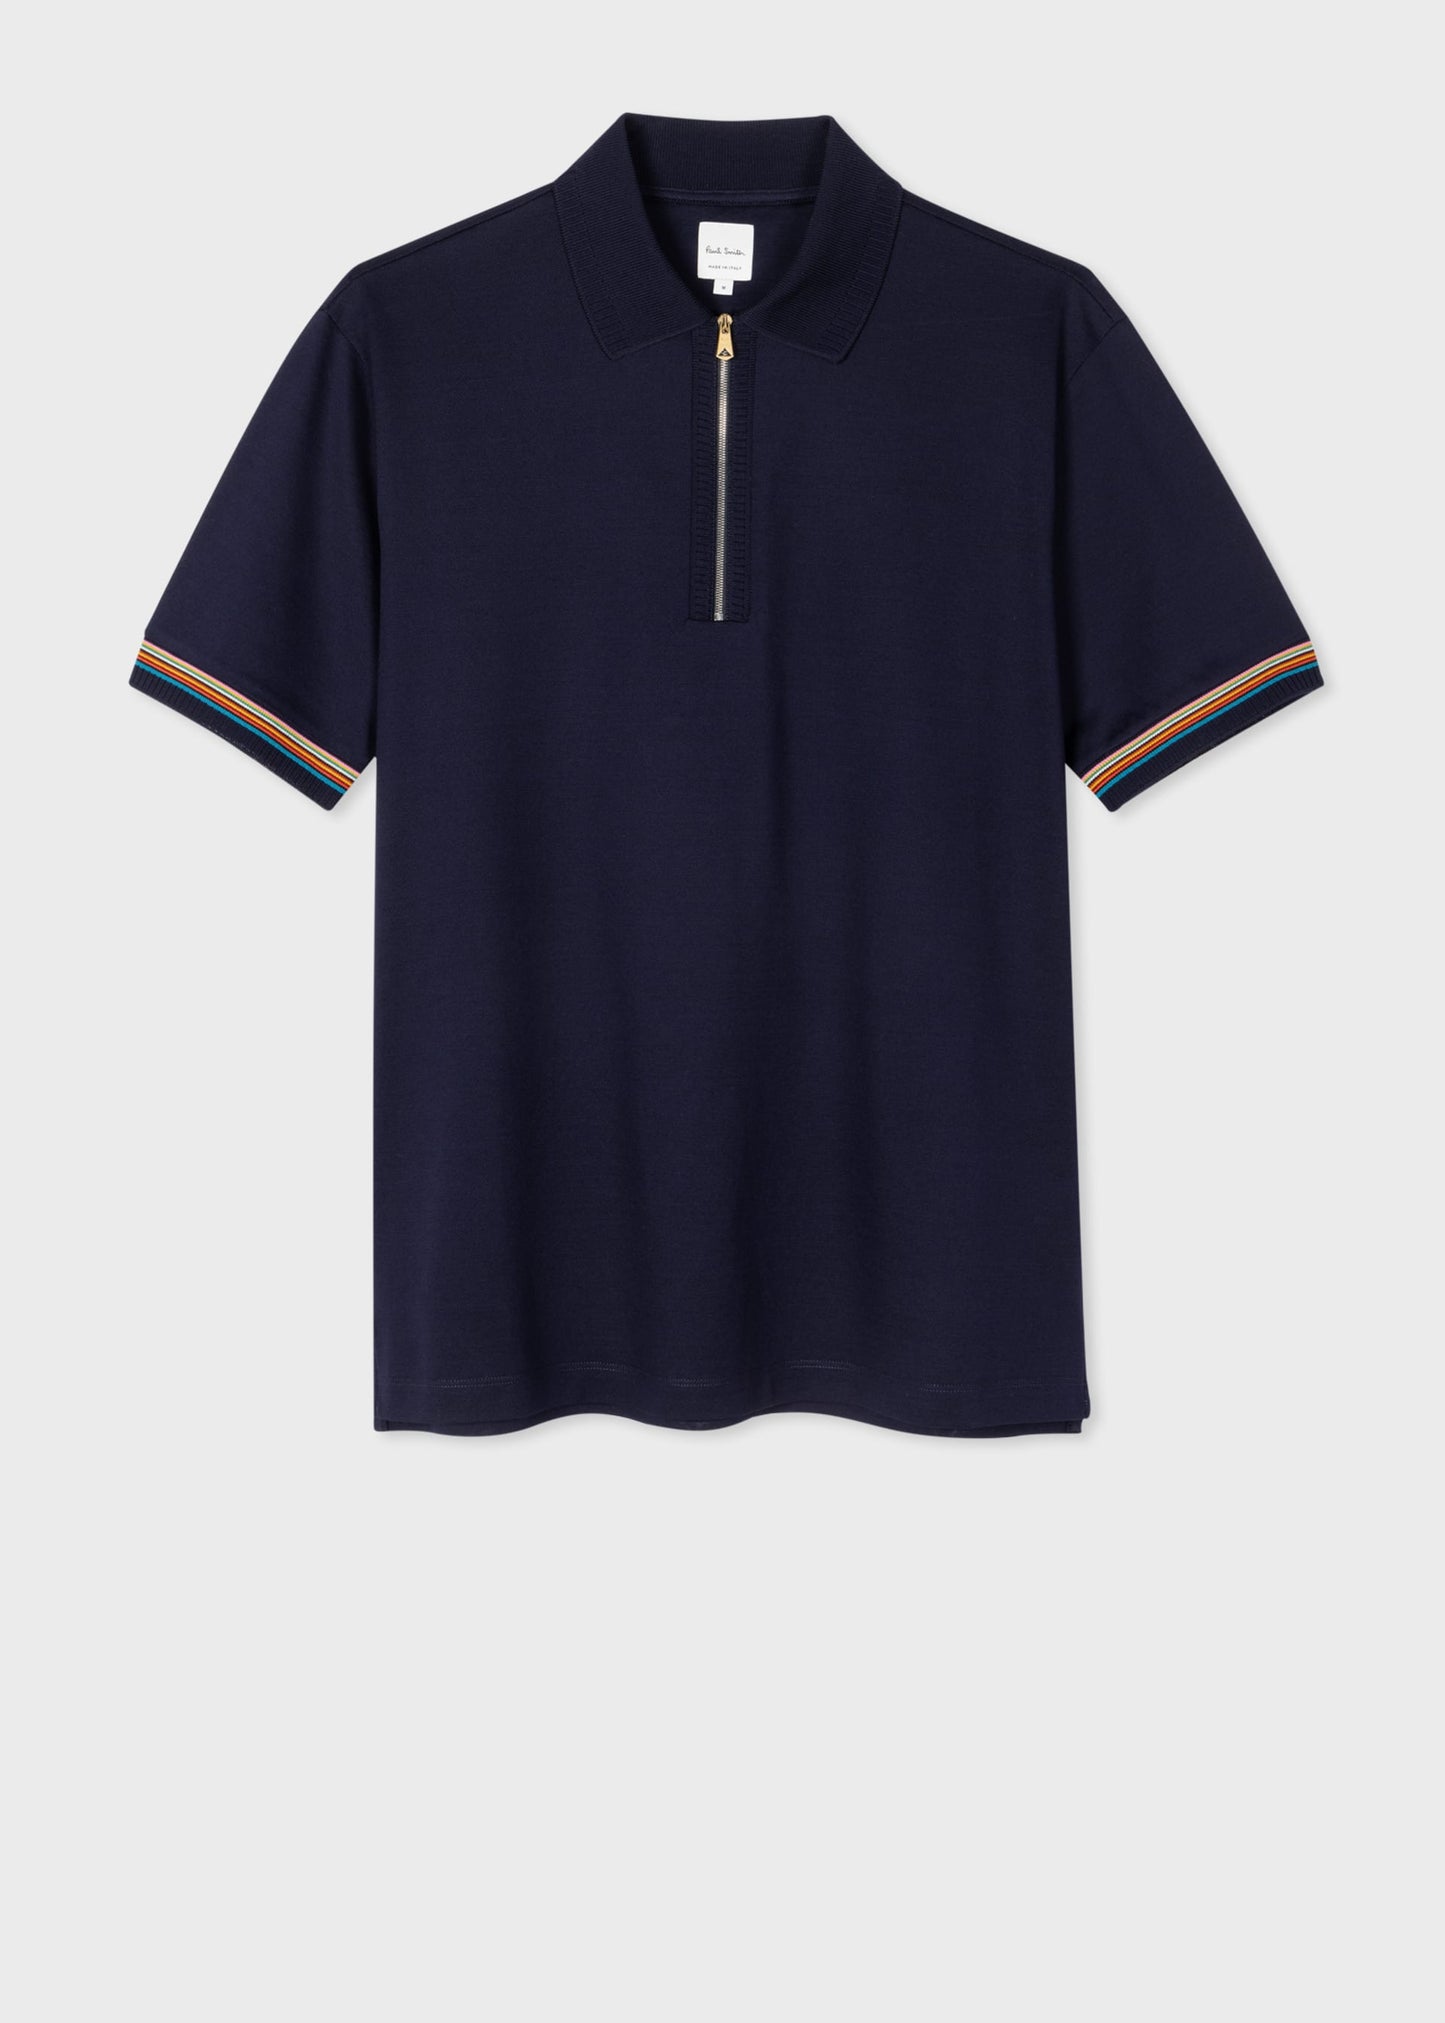 Paul Smith Navy Cotton 'Signature Stripe' Trim Zip Polo Shirt